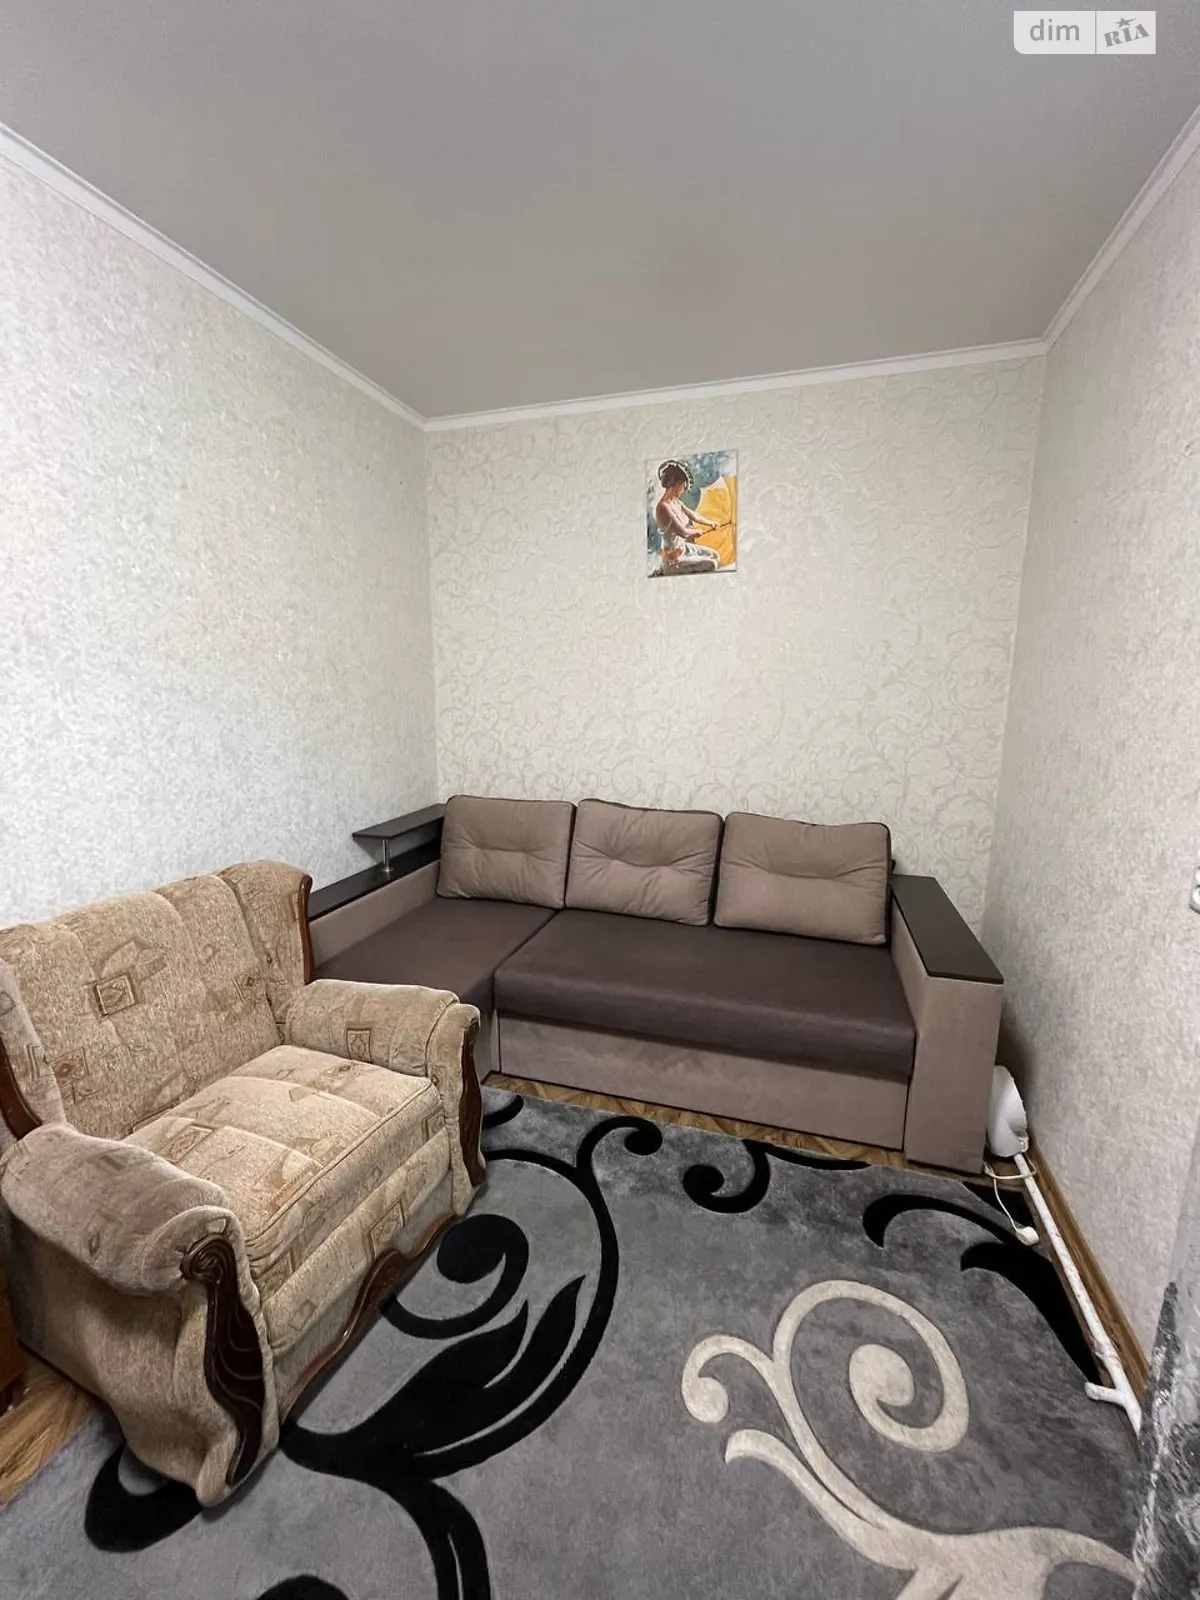 Продается комната 35 кв. м в Николаеве - фото 2